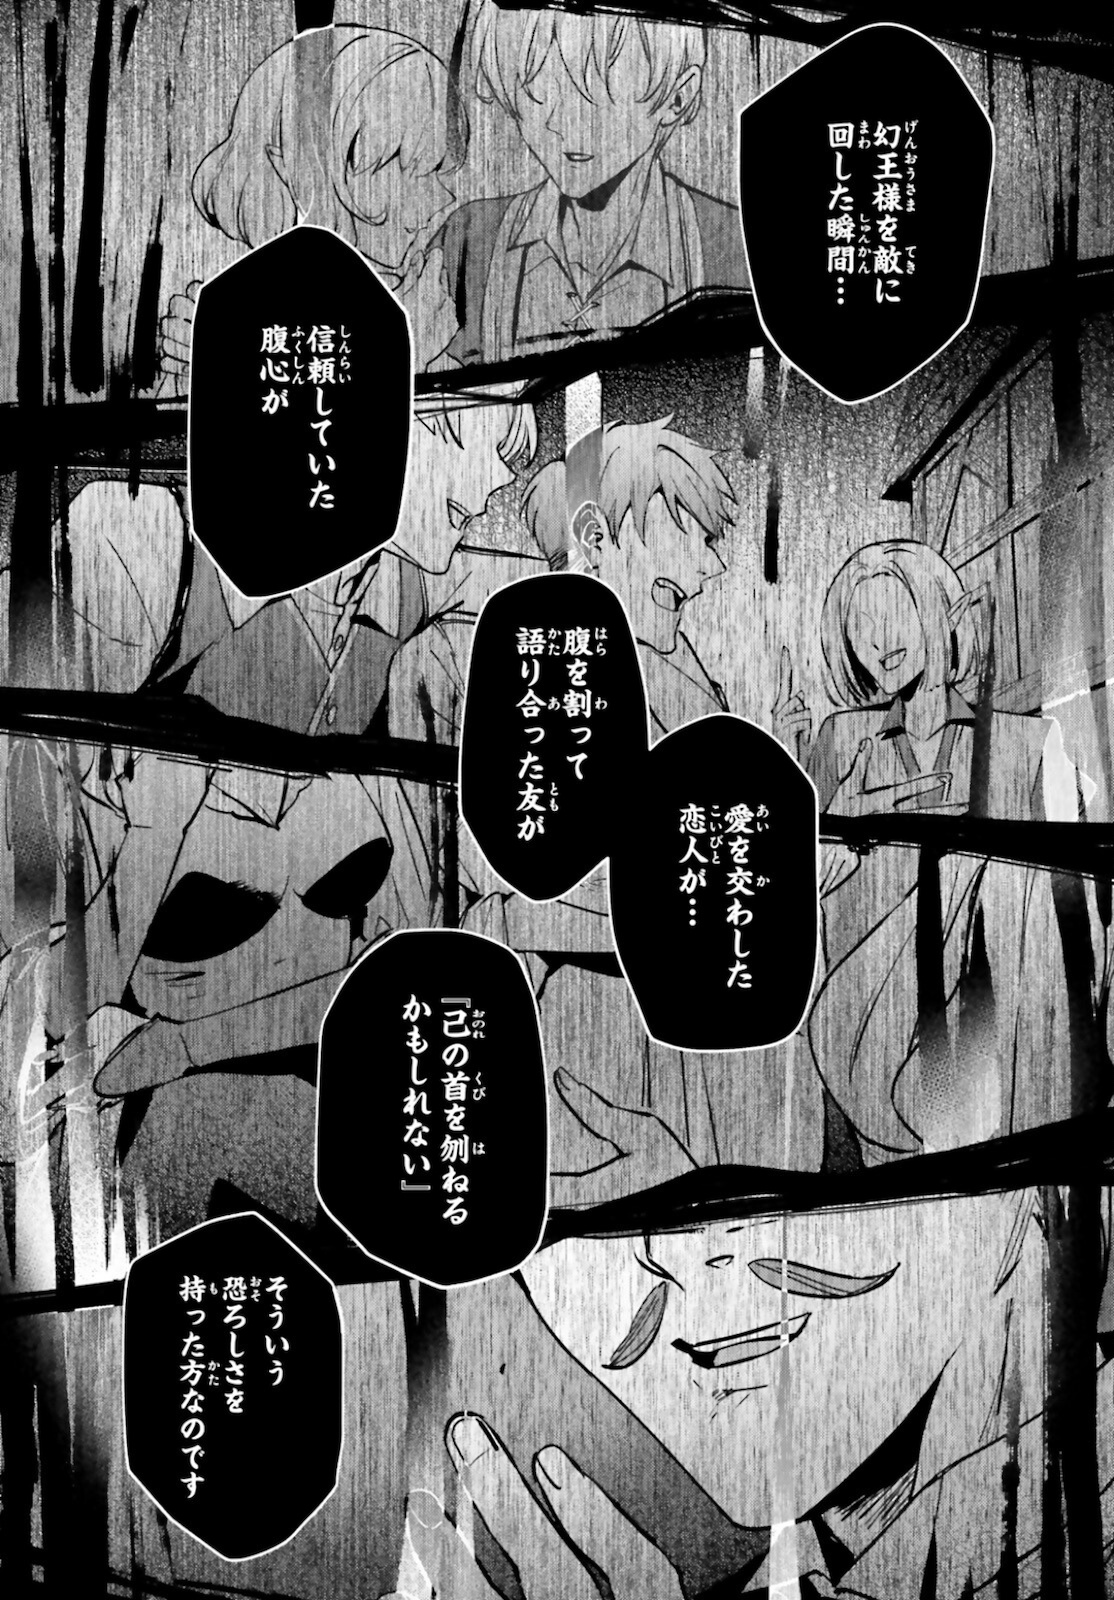 Yuusha Shoukan ni Makikomareta kedo Isekai wa Heiwa deshita (I Was Caught  Up In A Hero Summoning But That World Is At Peace) Image by Ochau #3062171  - Zerochan Anime Image Board